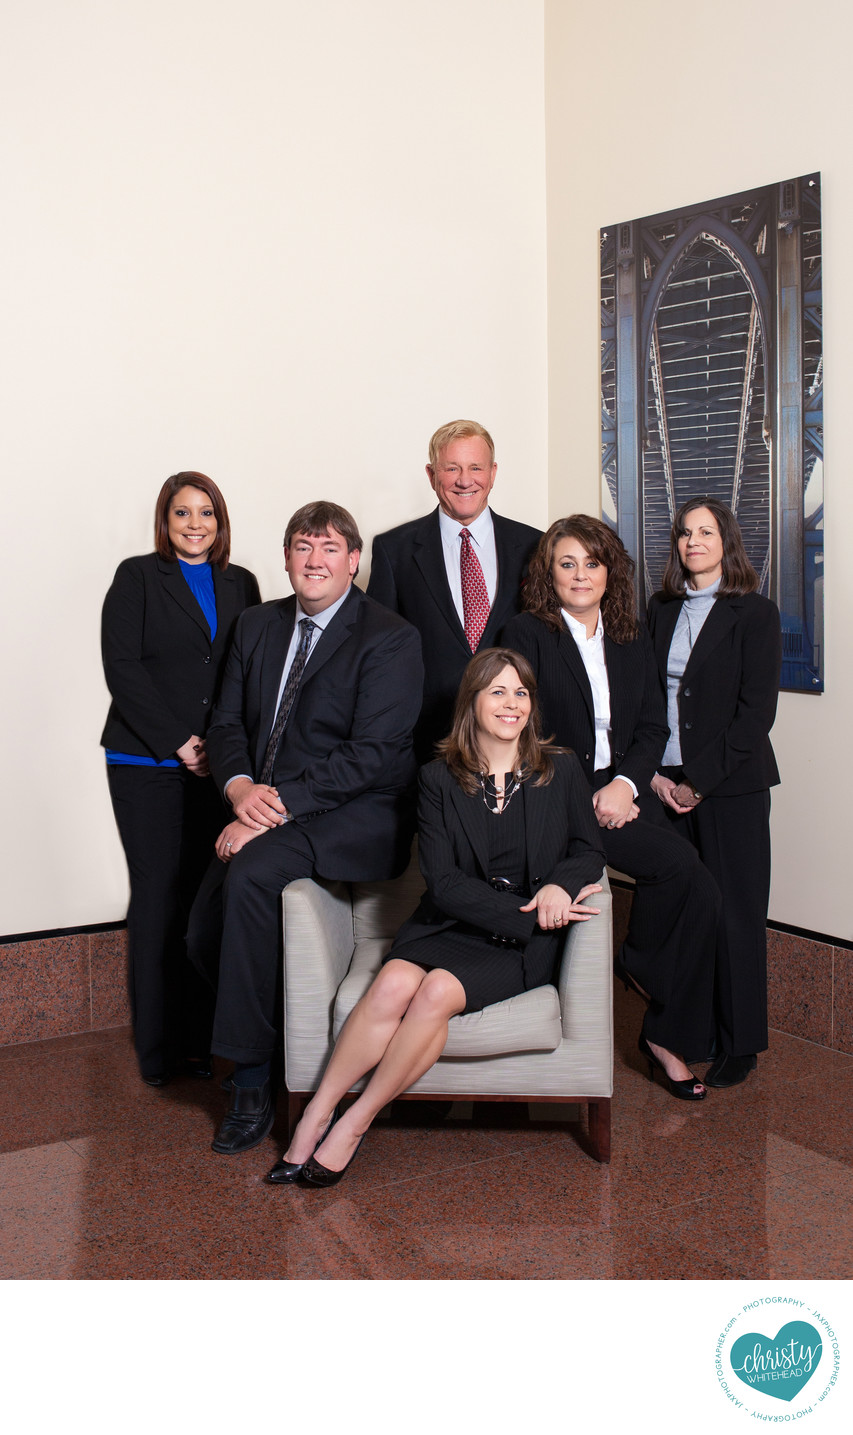 Financial Advisers Group Photo Shoot Jacksonville 